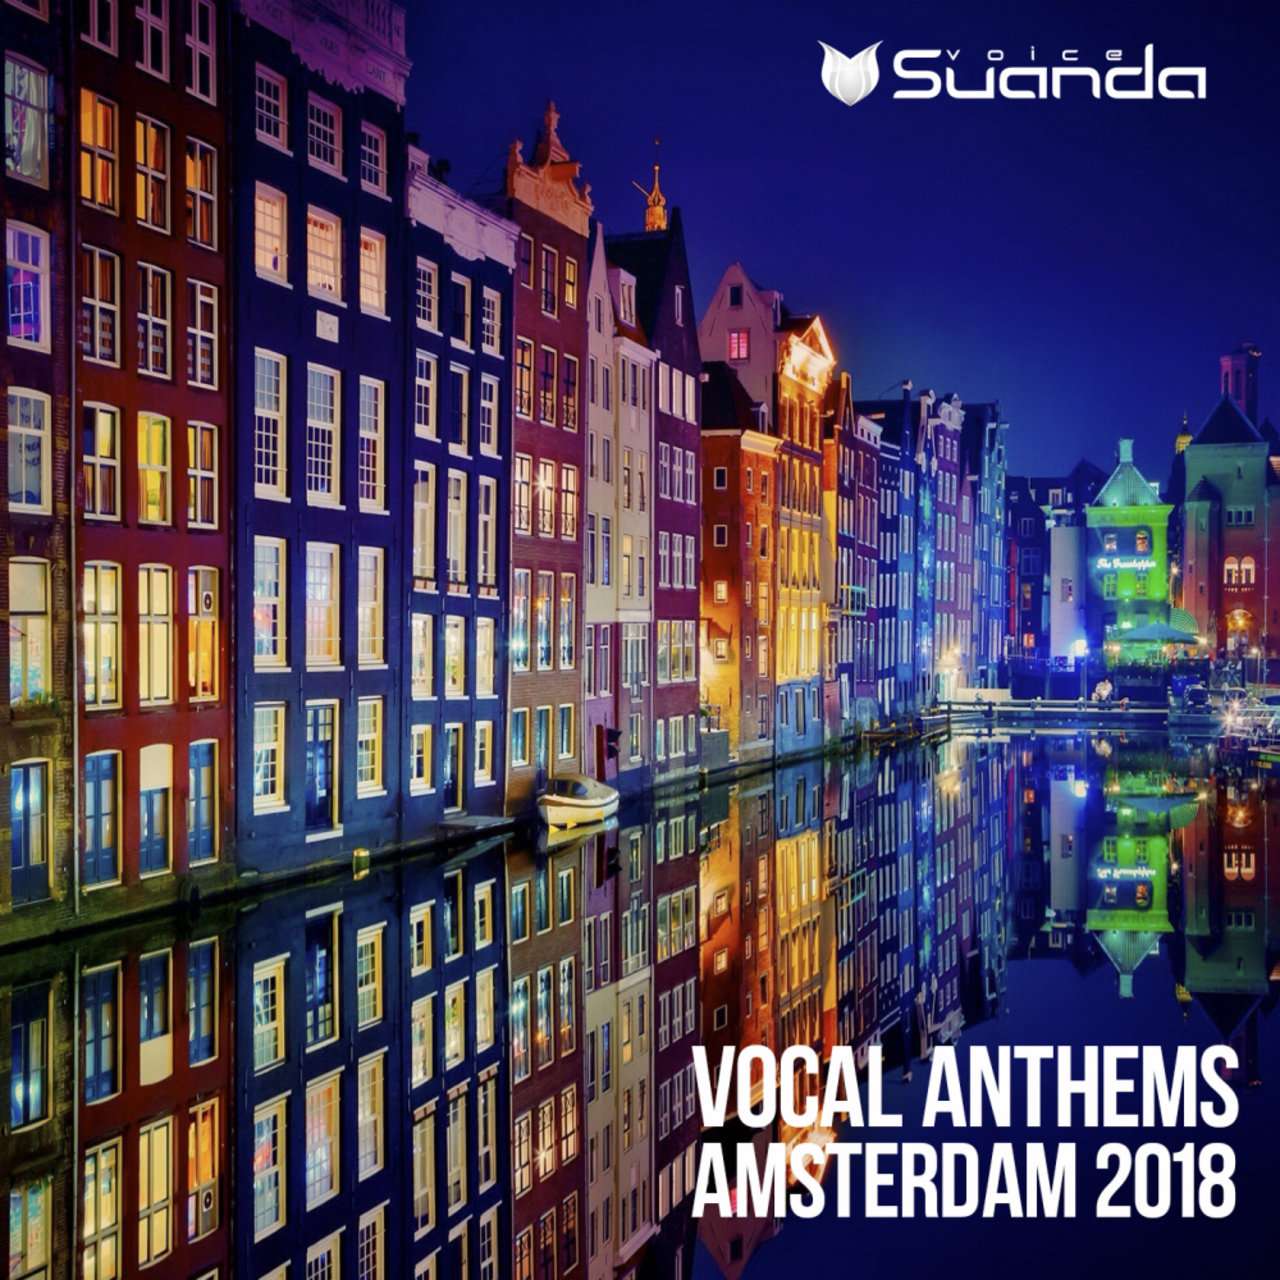 Suanda Voice《Vocal Anthems Amsterdam 2018》[CD级无损/44.1kHz/16bit]